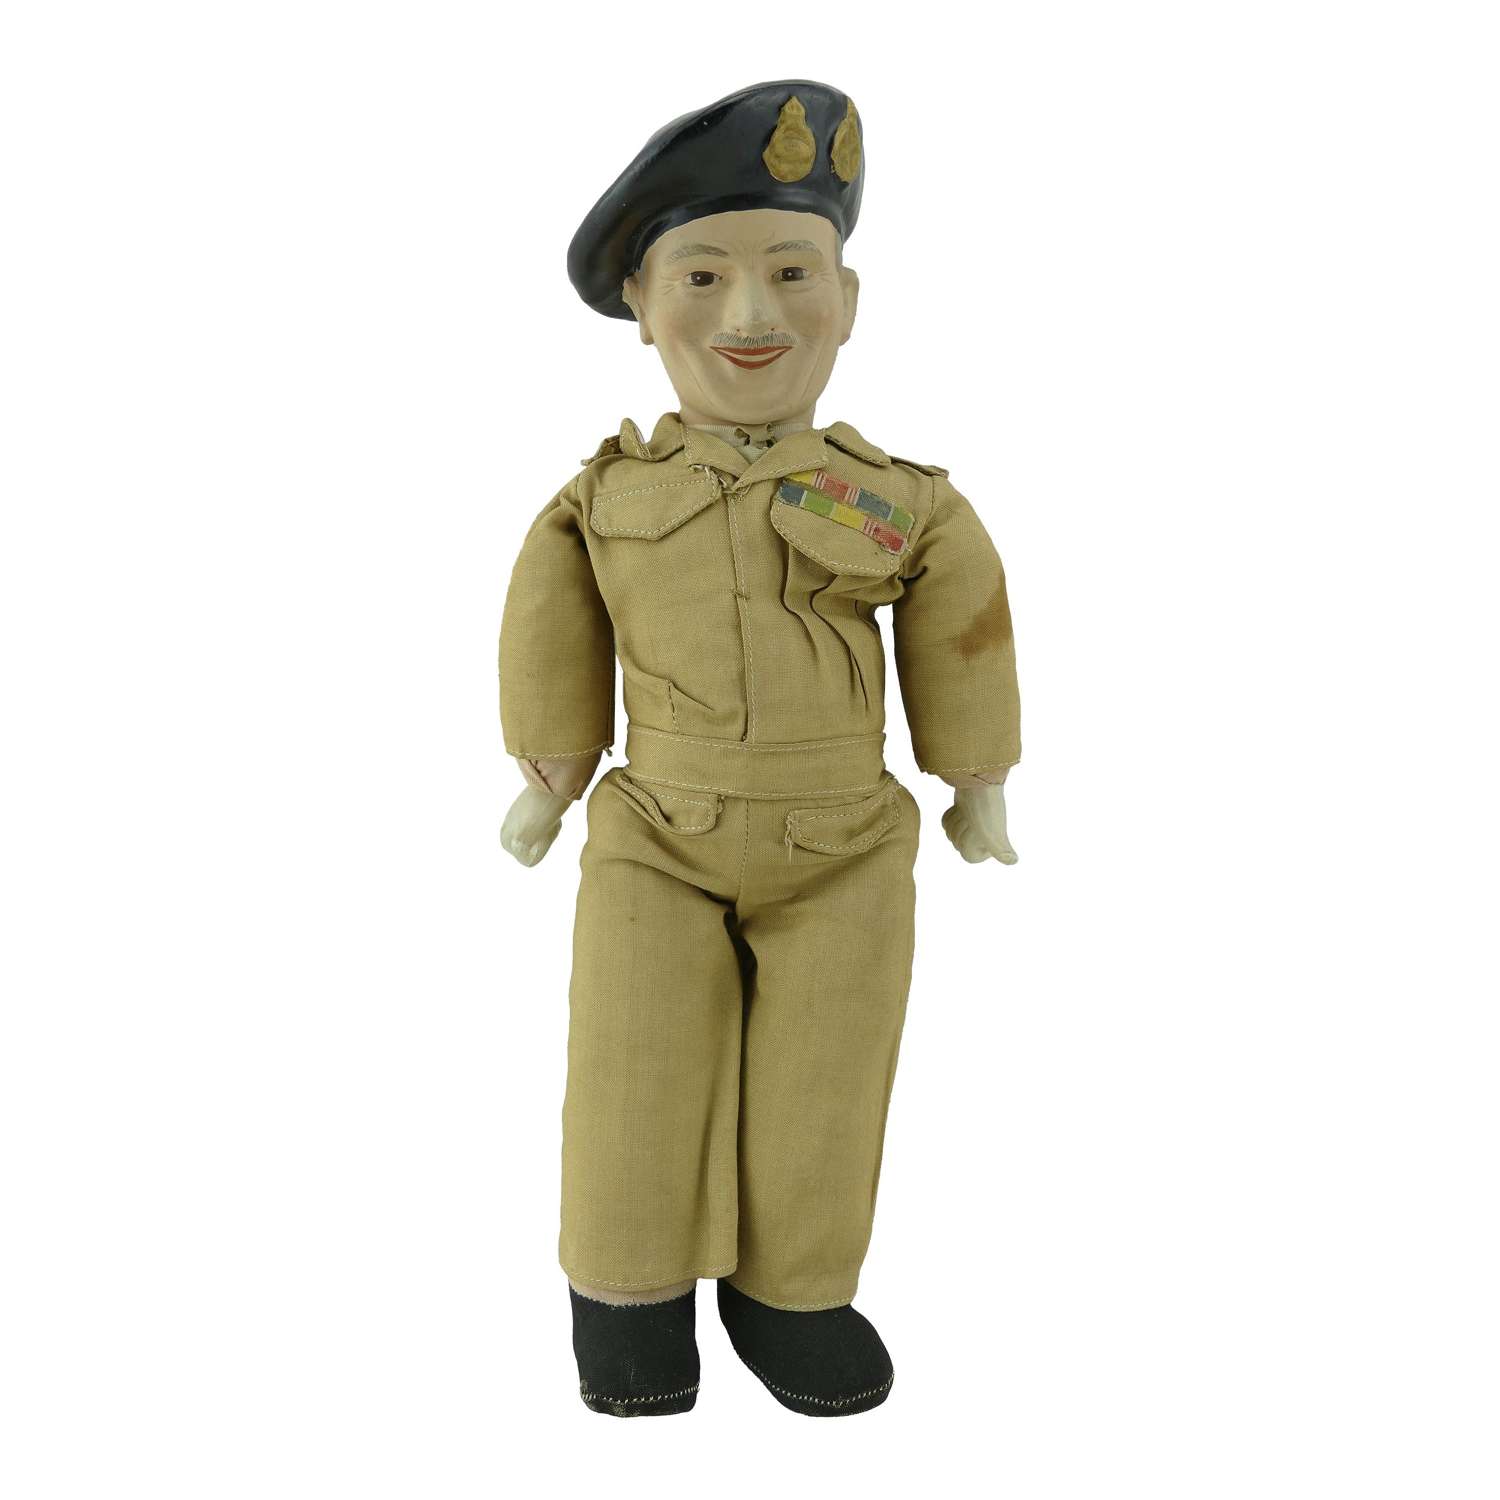 Wartime 'Monty' doll